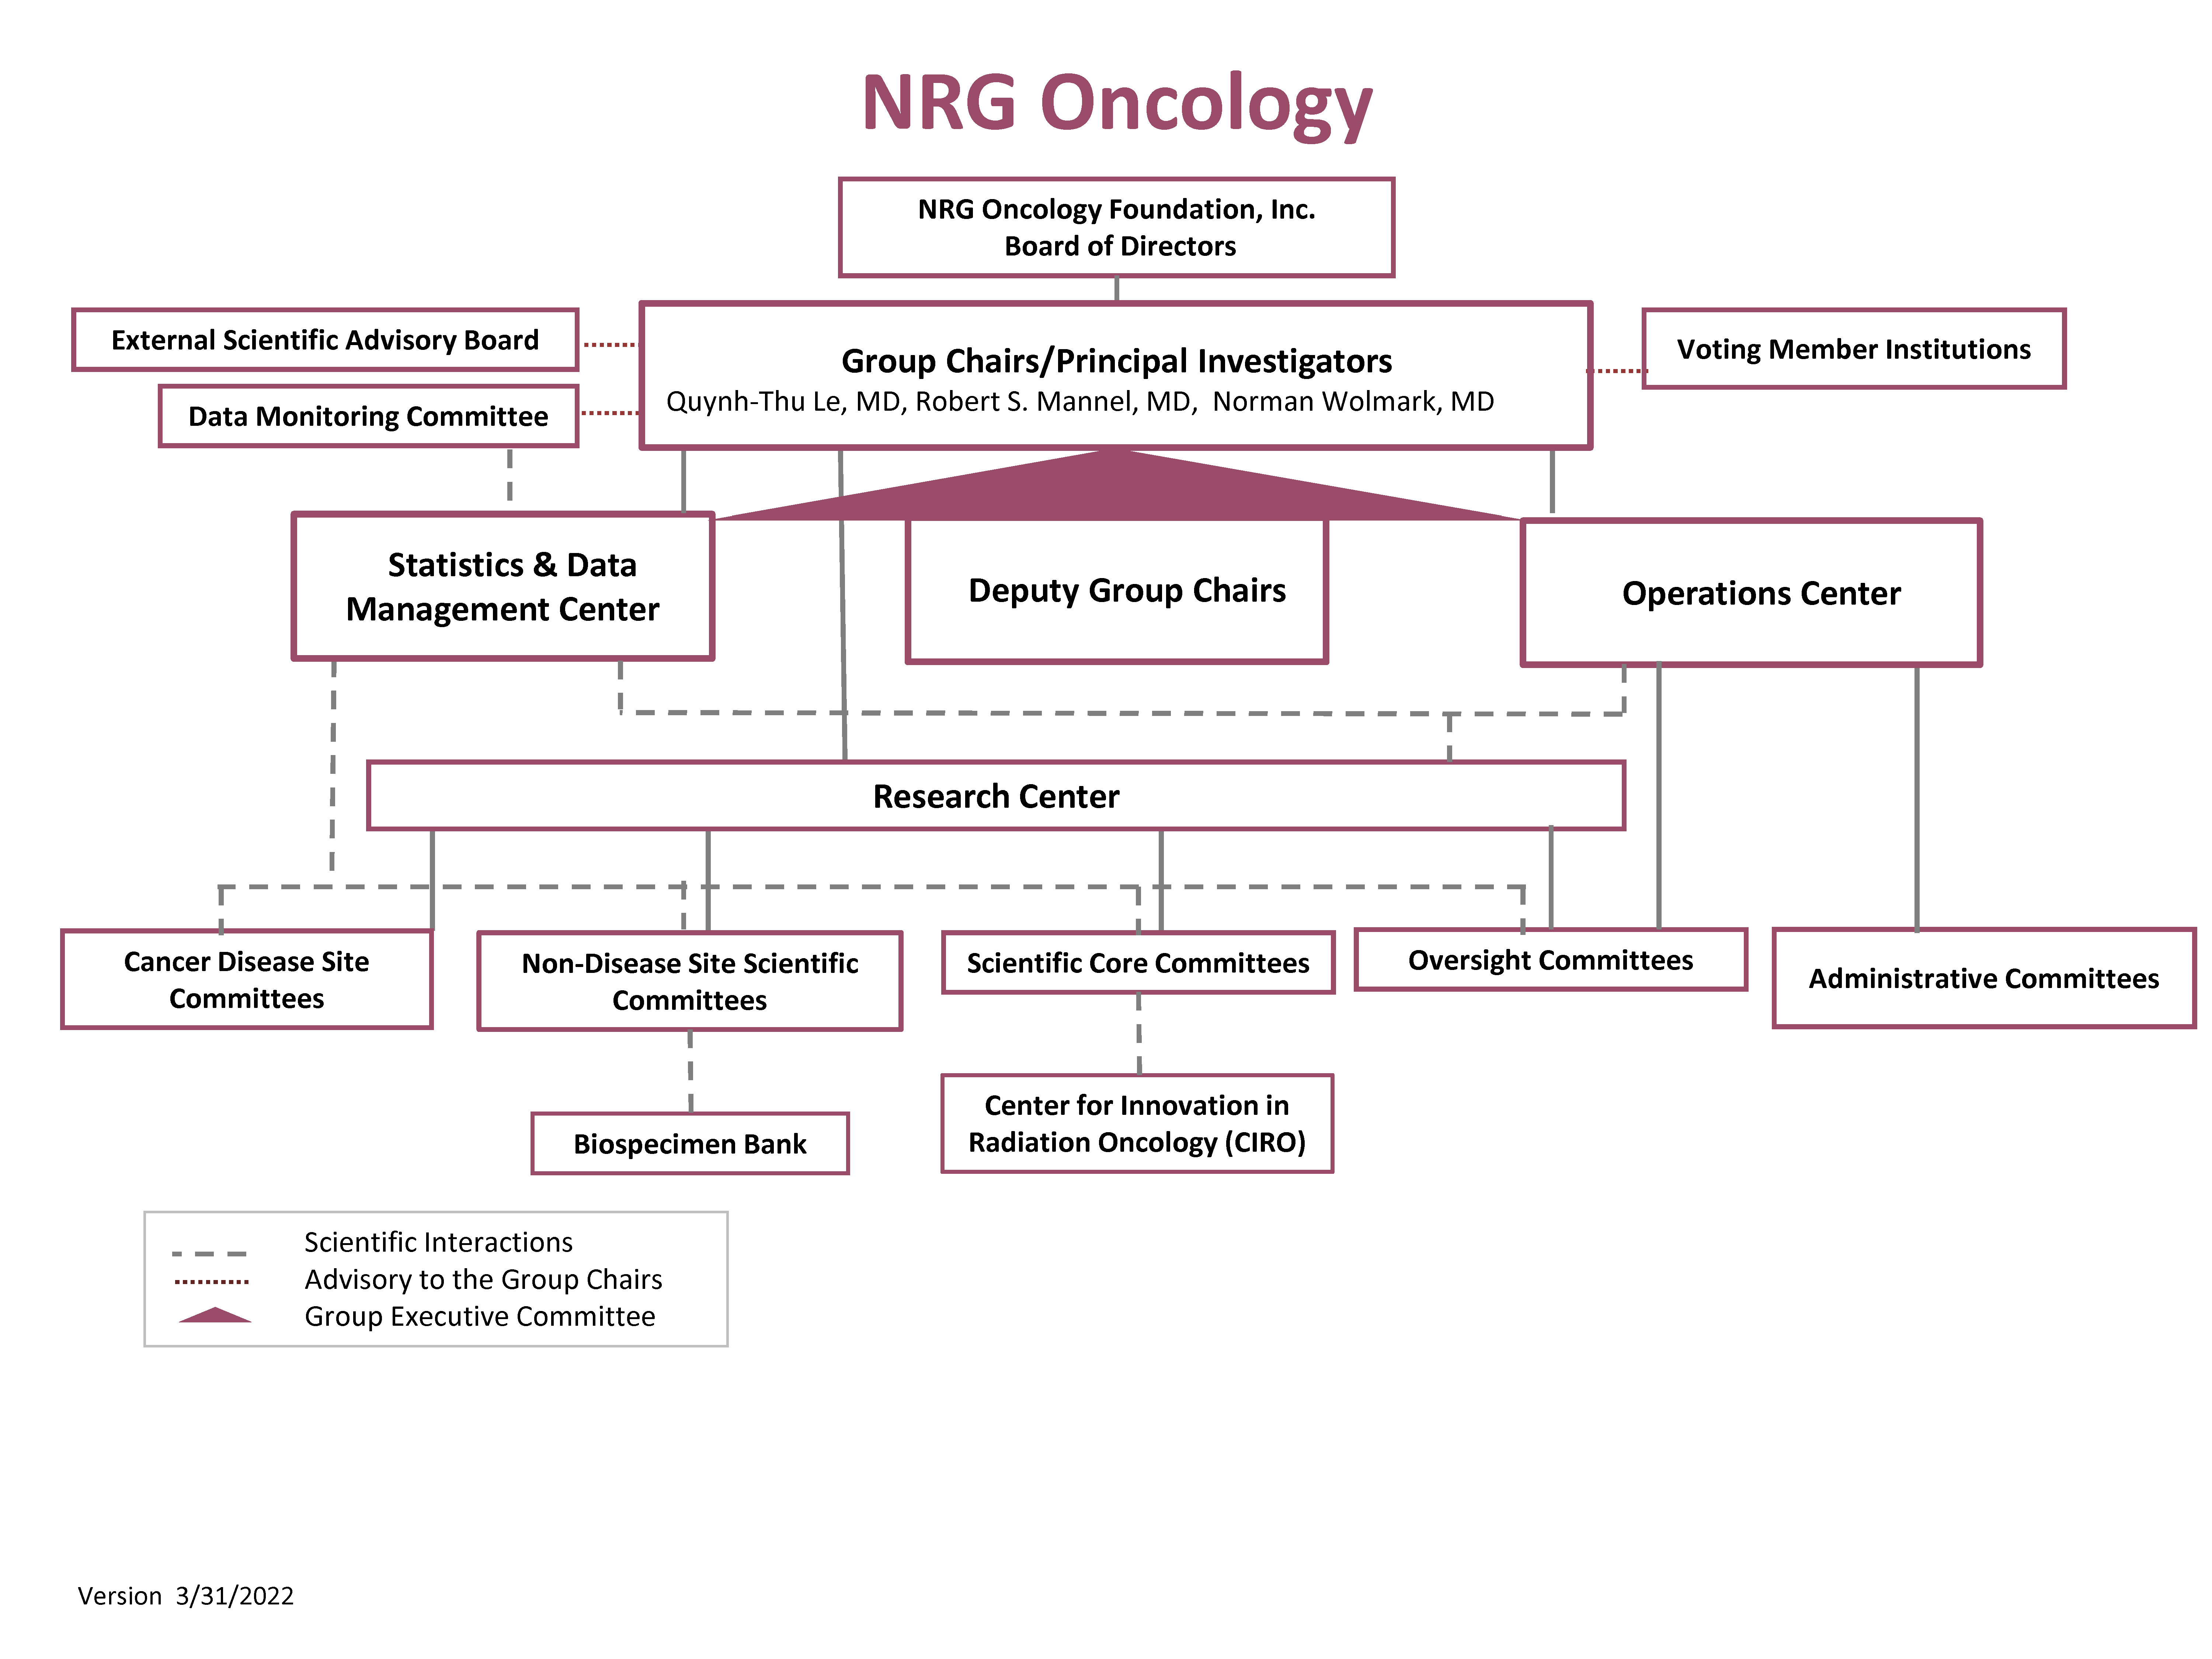 NRG Org Chart 03-31-2022